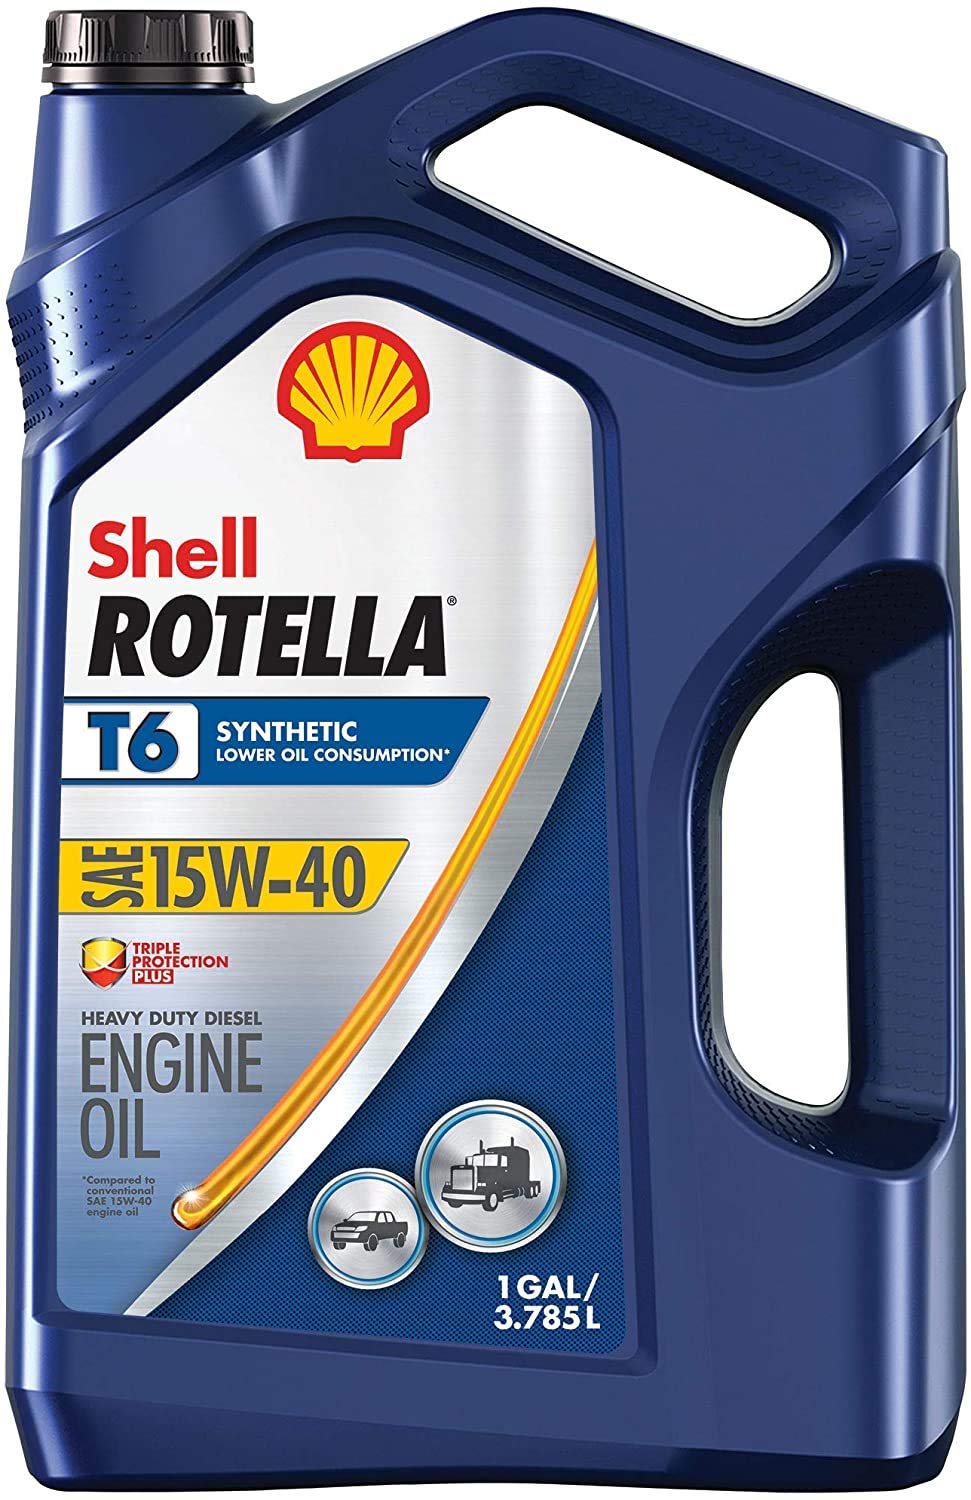 Shell Rotella Huile moteur diesel entièrement synthétique T6